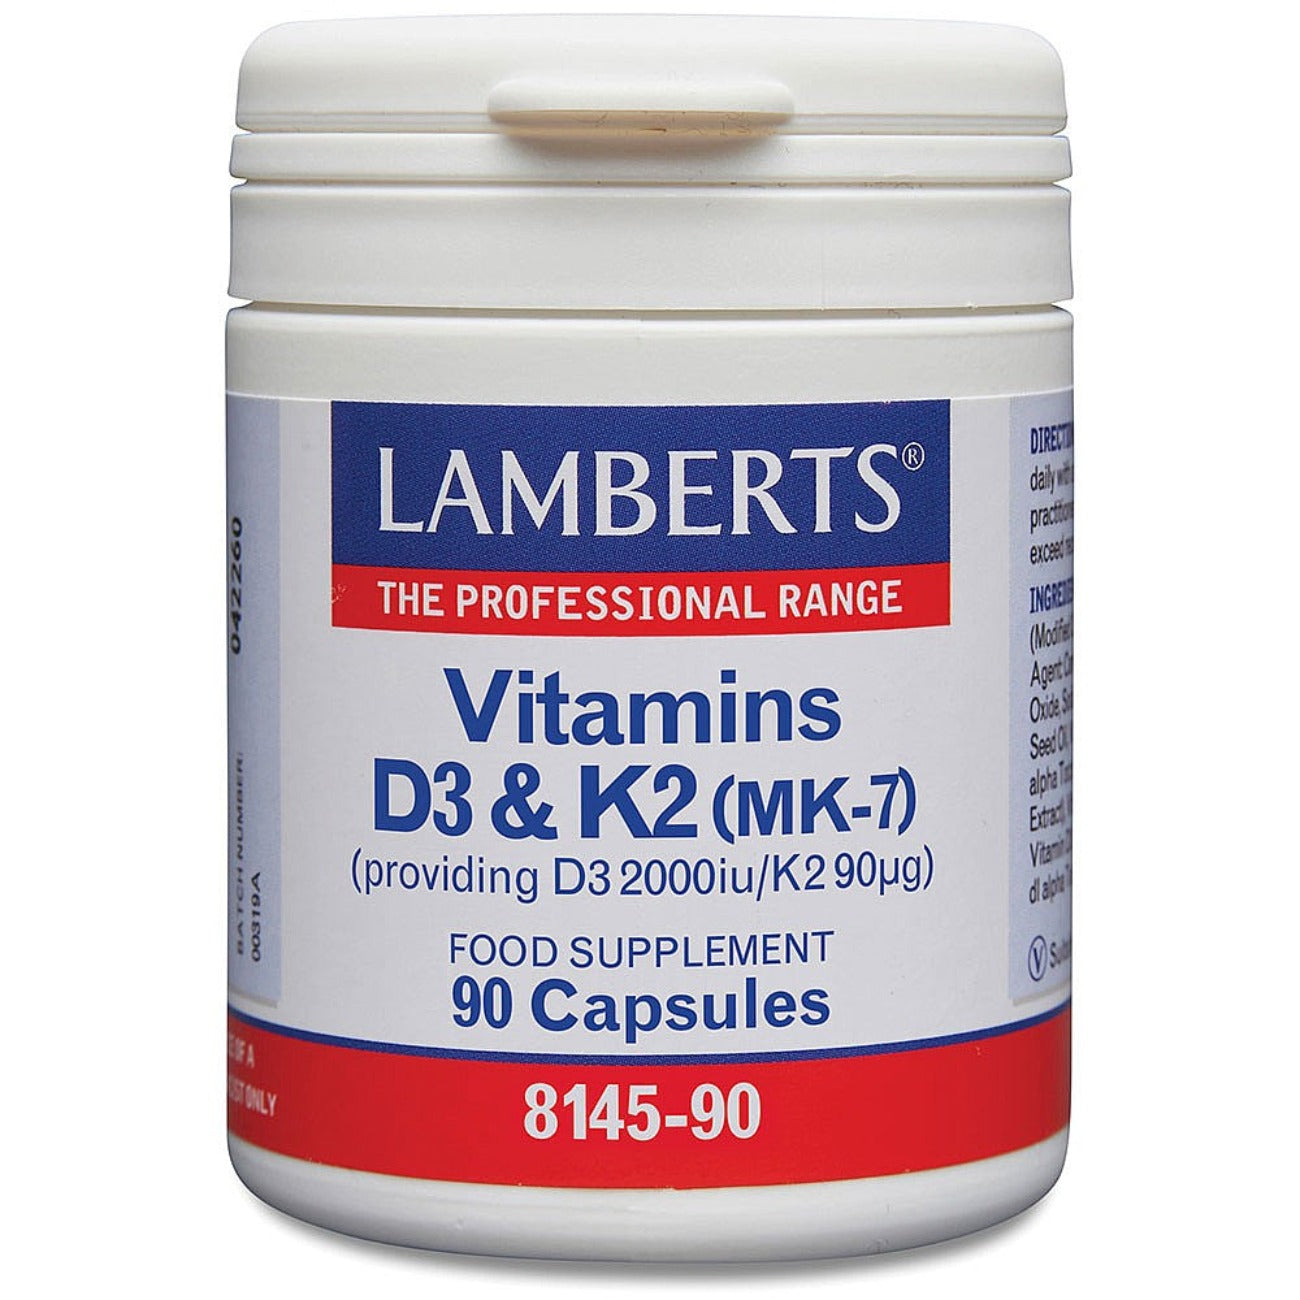 Vitamins D3(2000iu) and K2(90ug) 90 Capsules